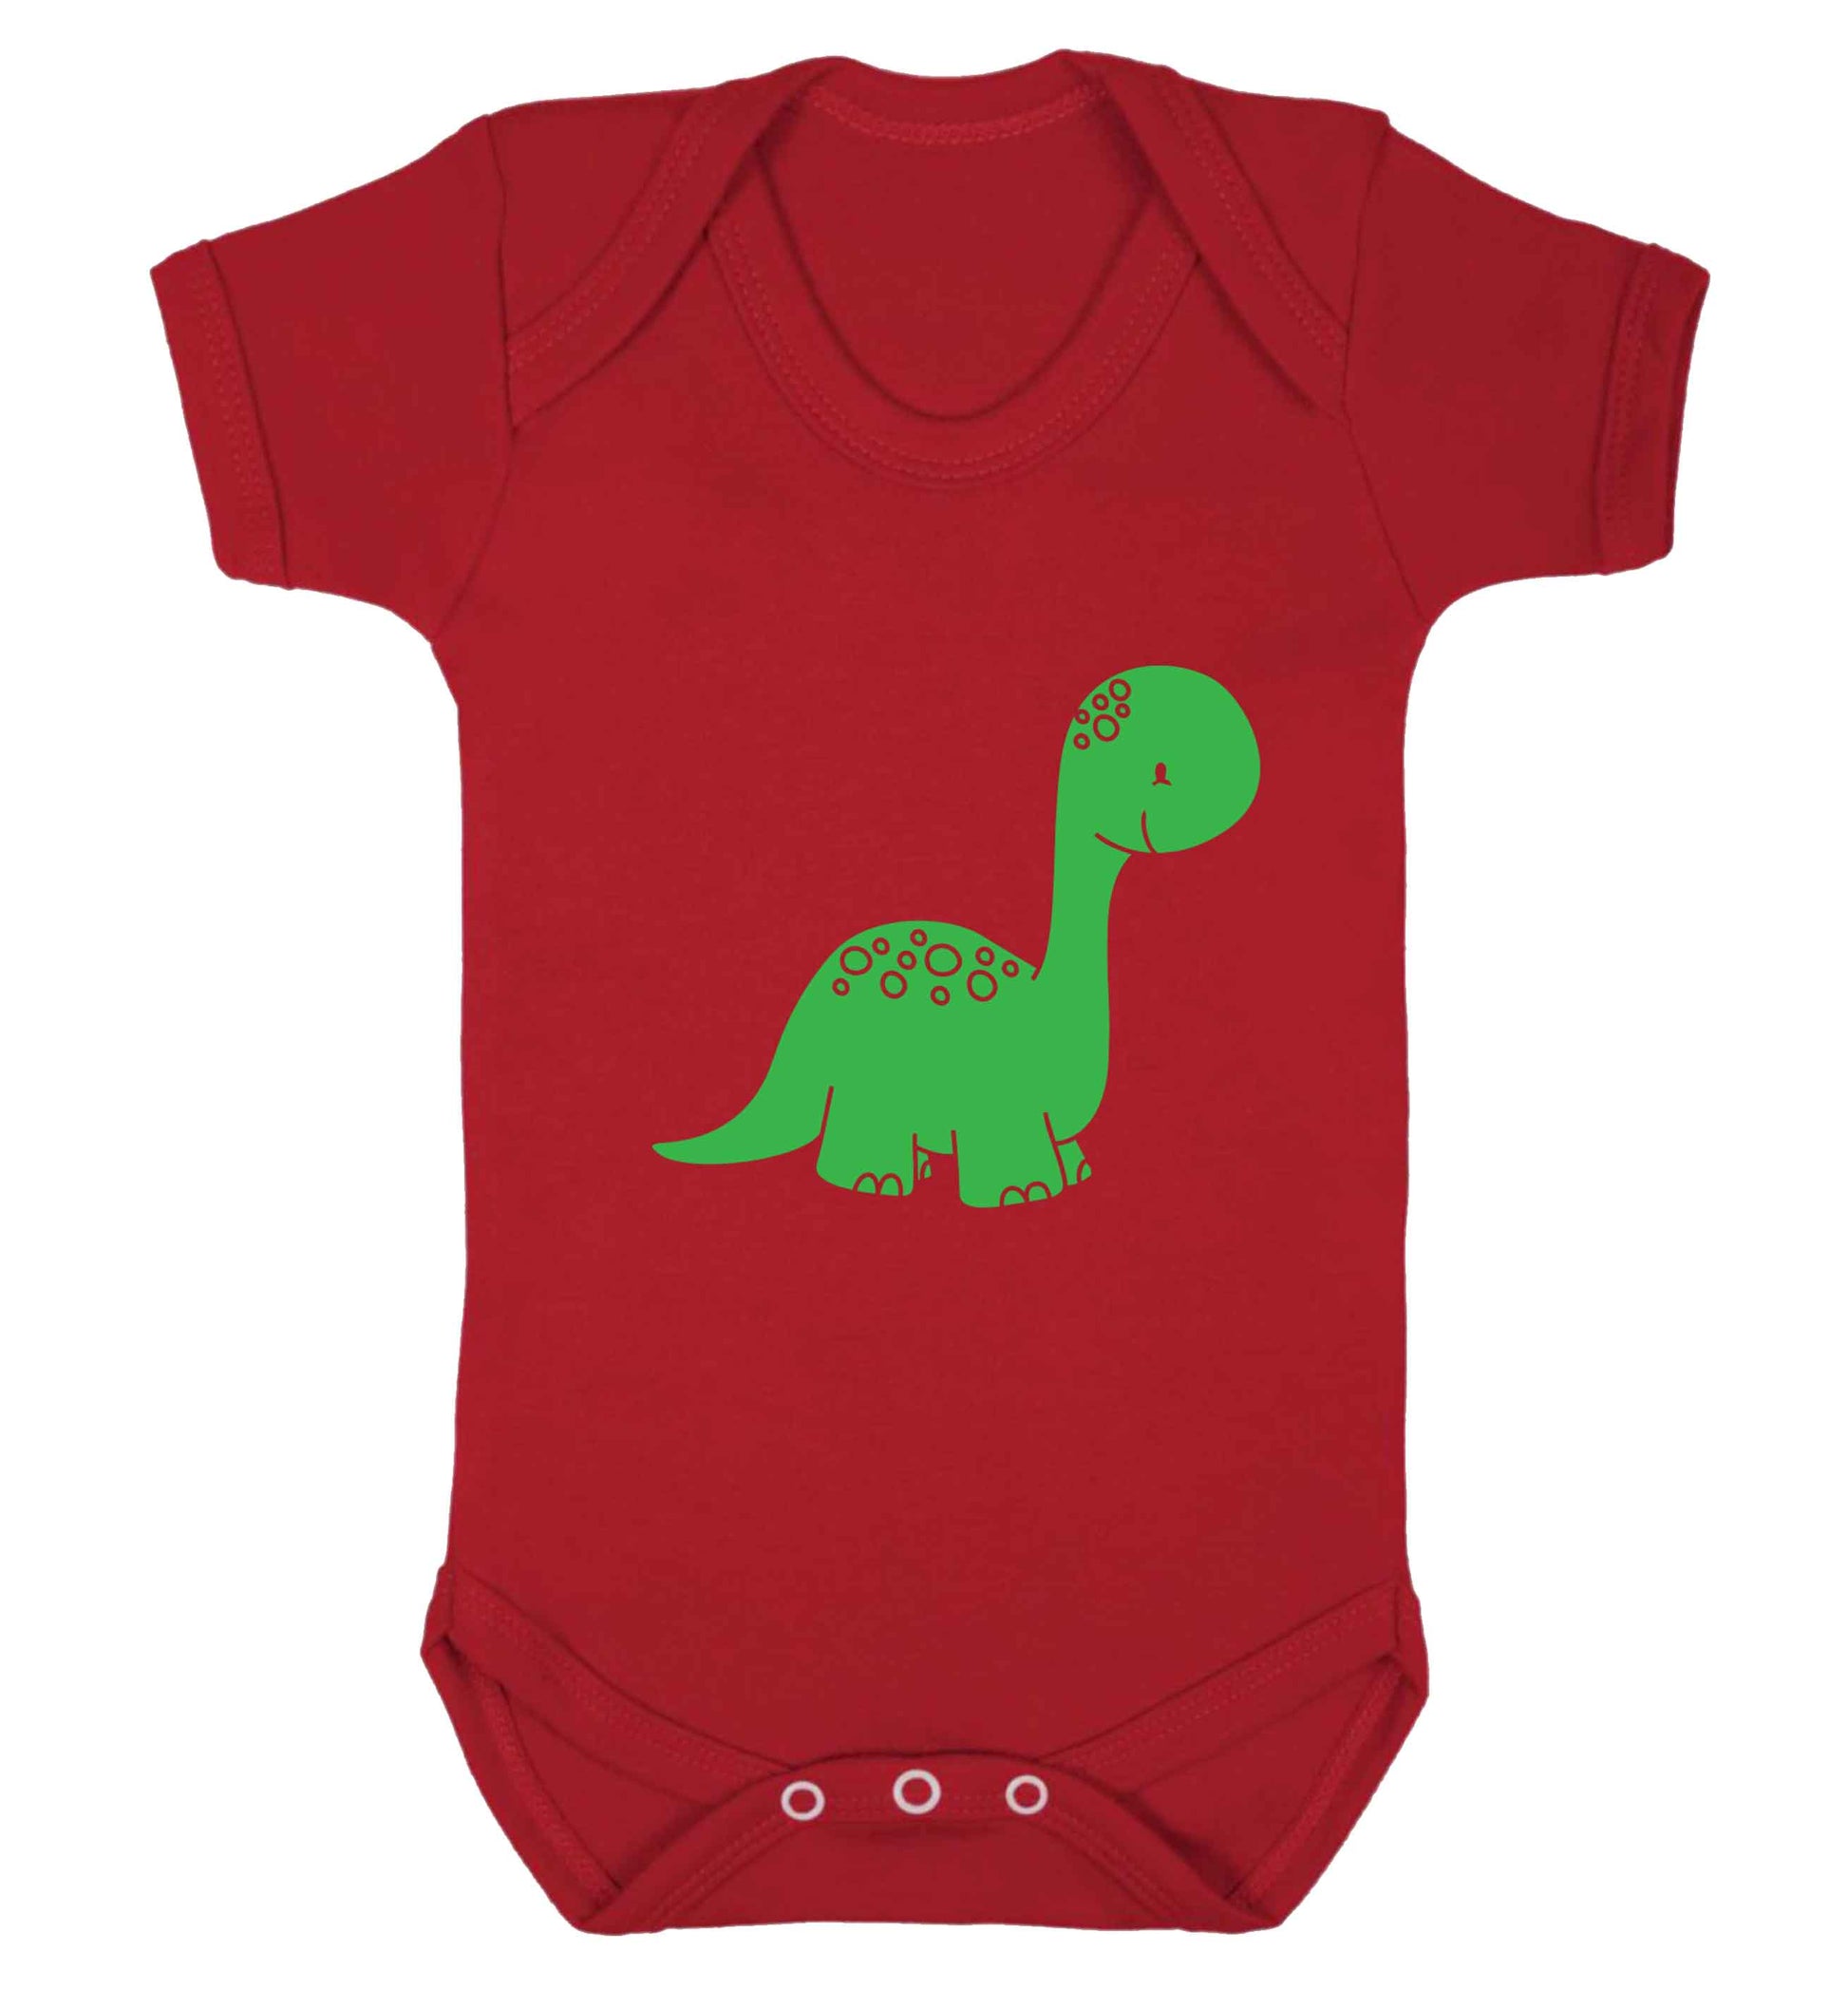 Dinosaur illustration baby vest red 18-24 months